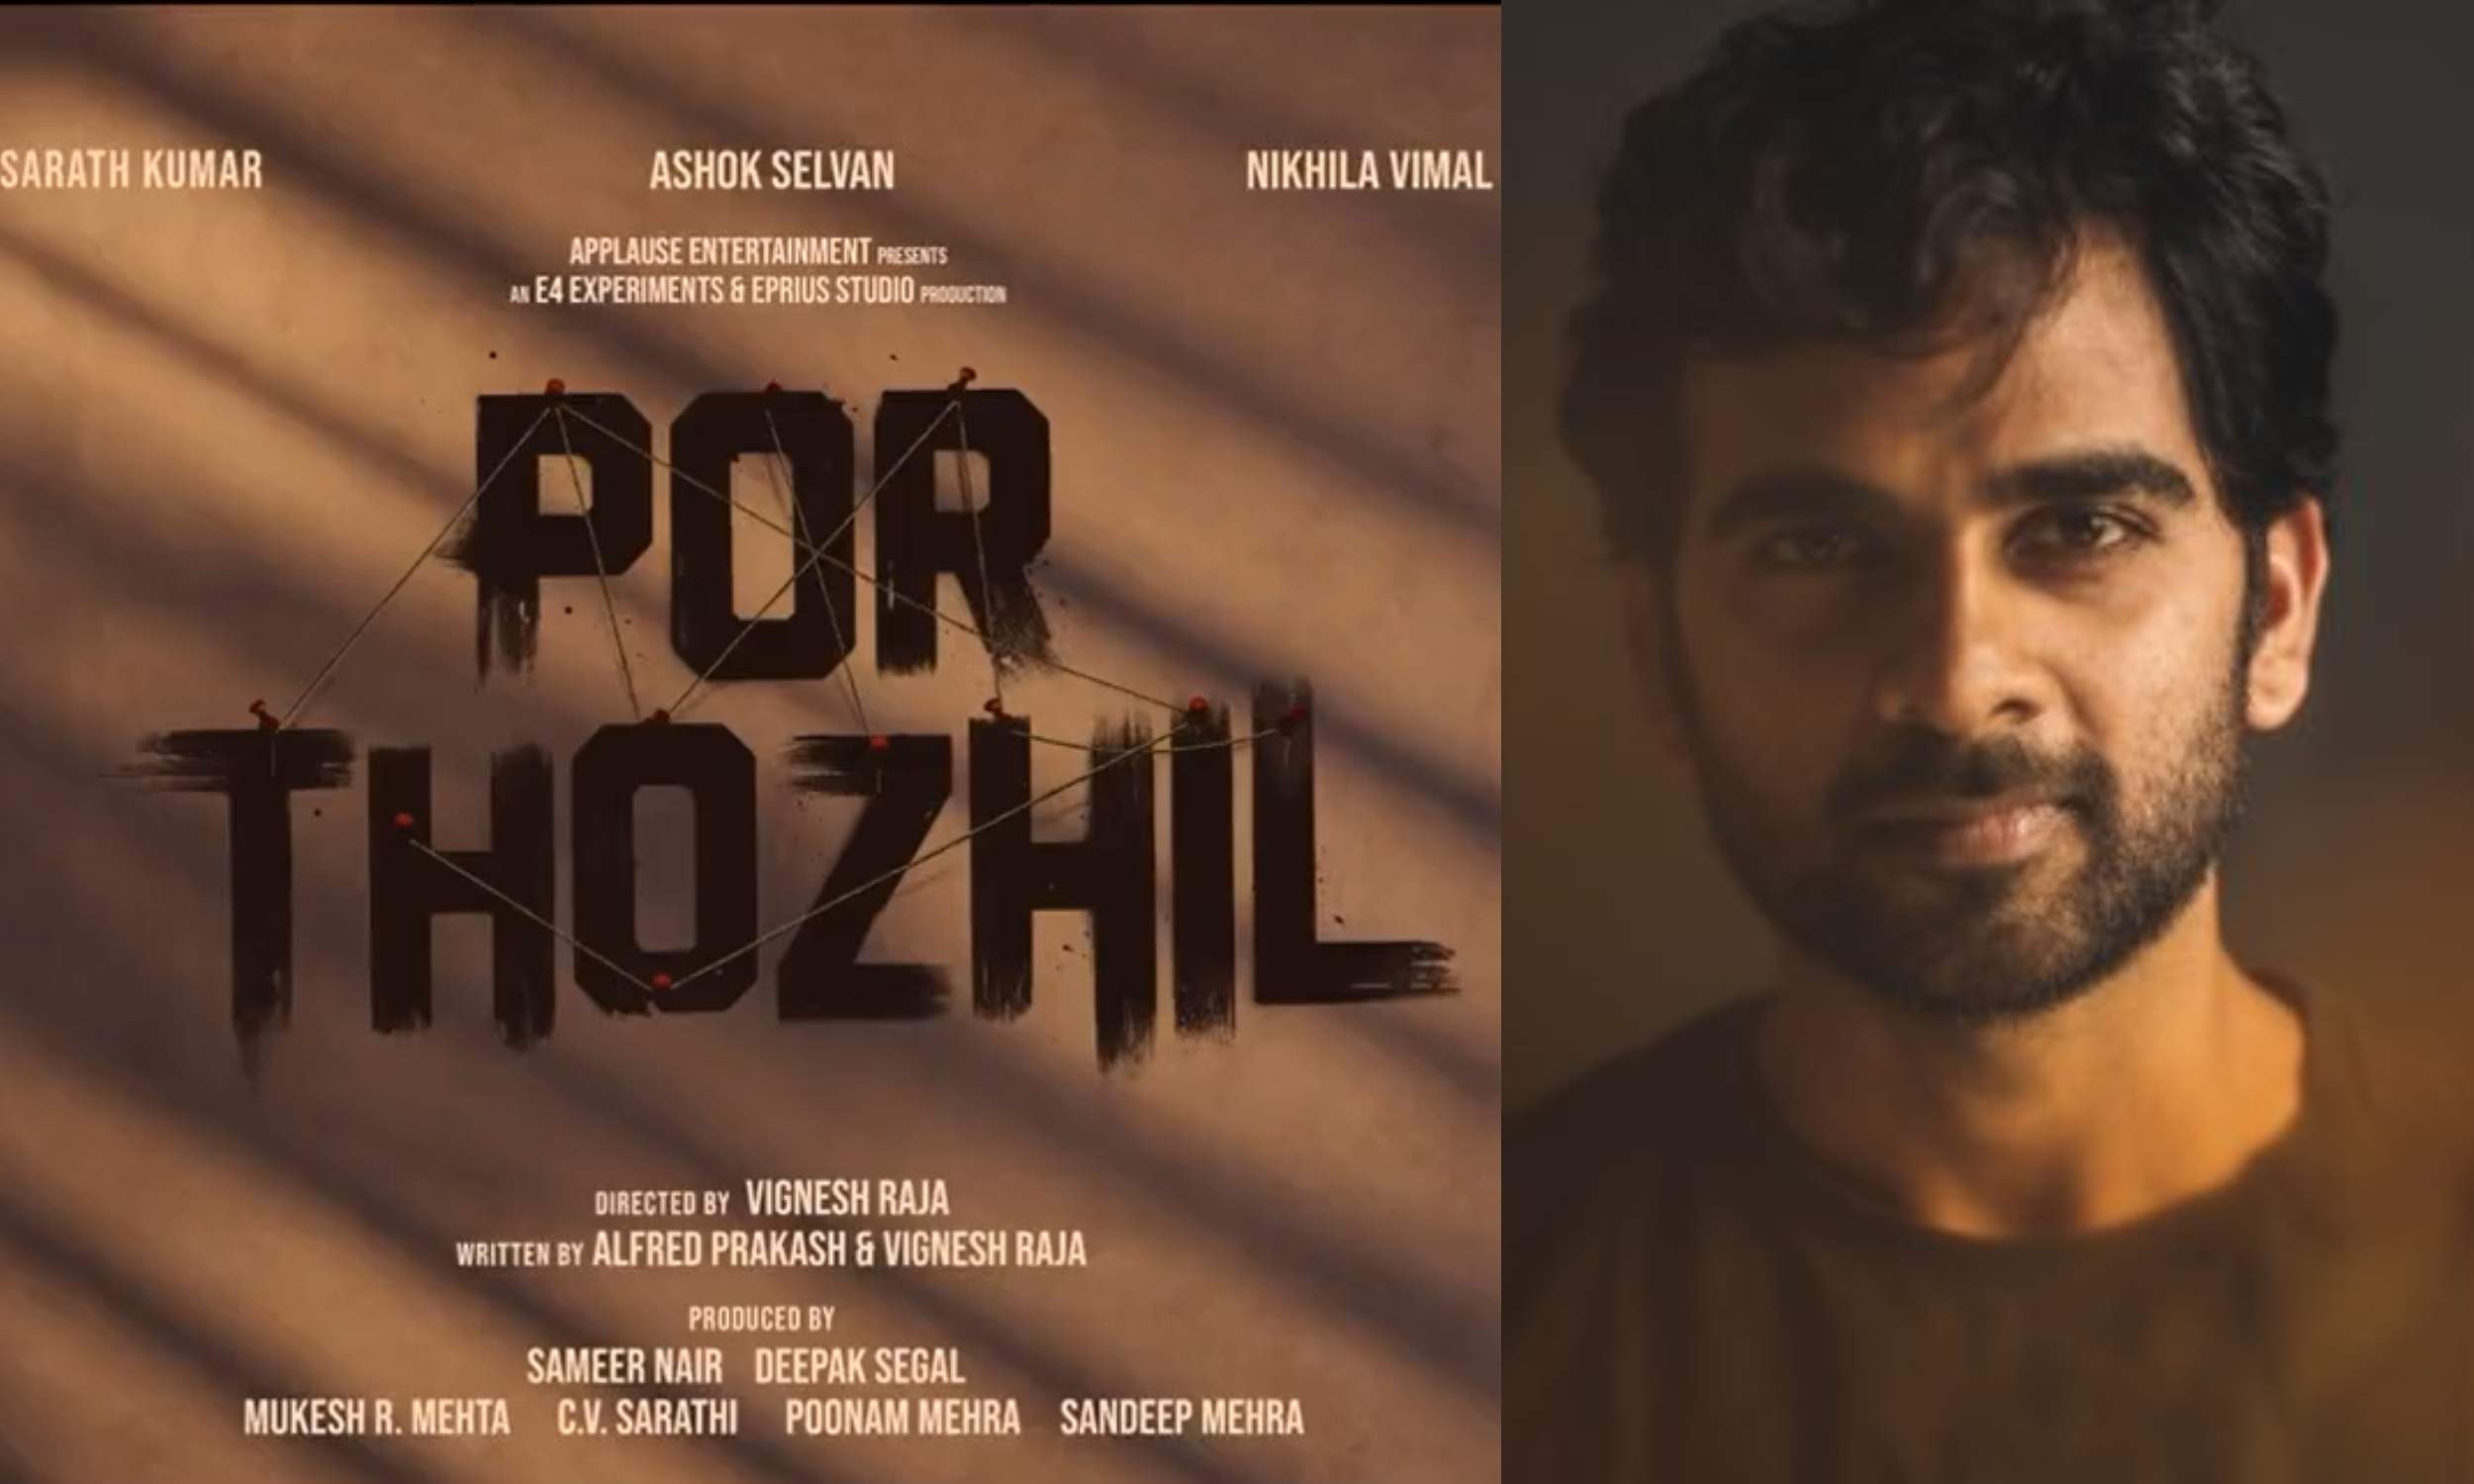 Ashok Selvan's next titled Por Thozhil